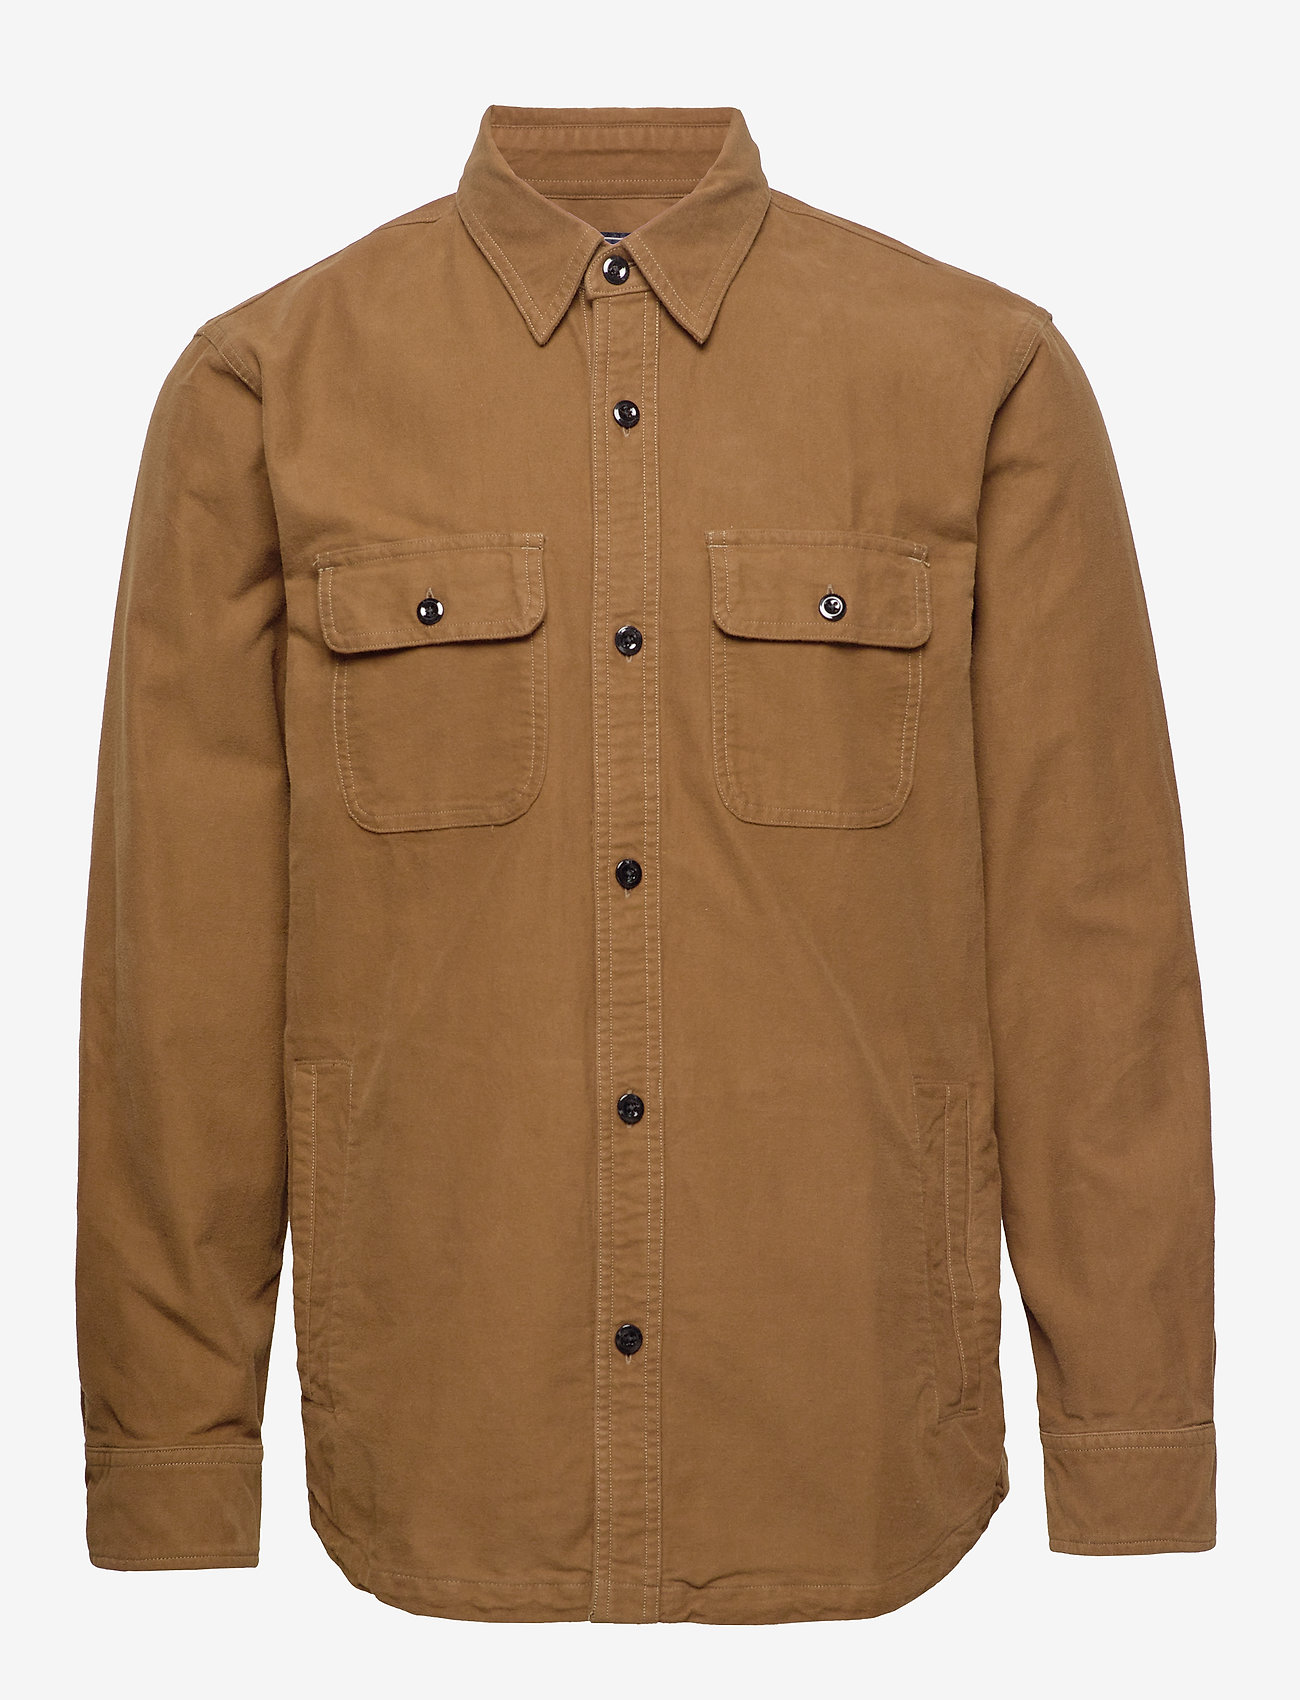 abercrombie brown jacket